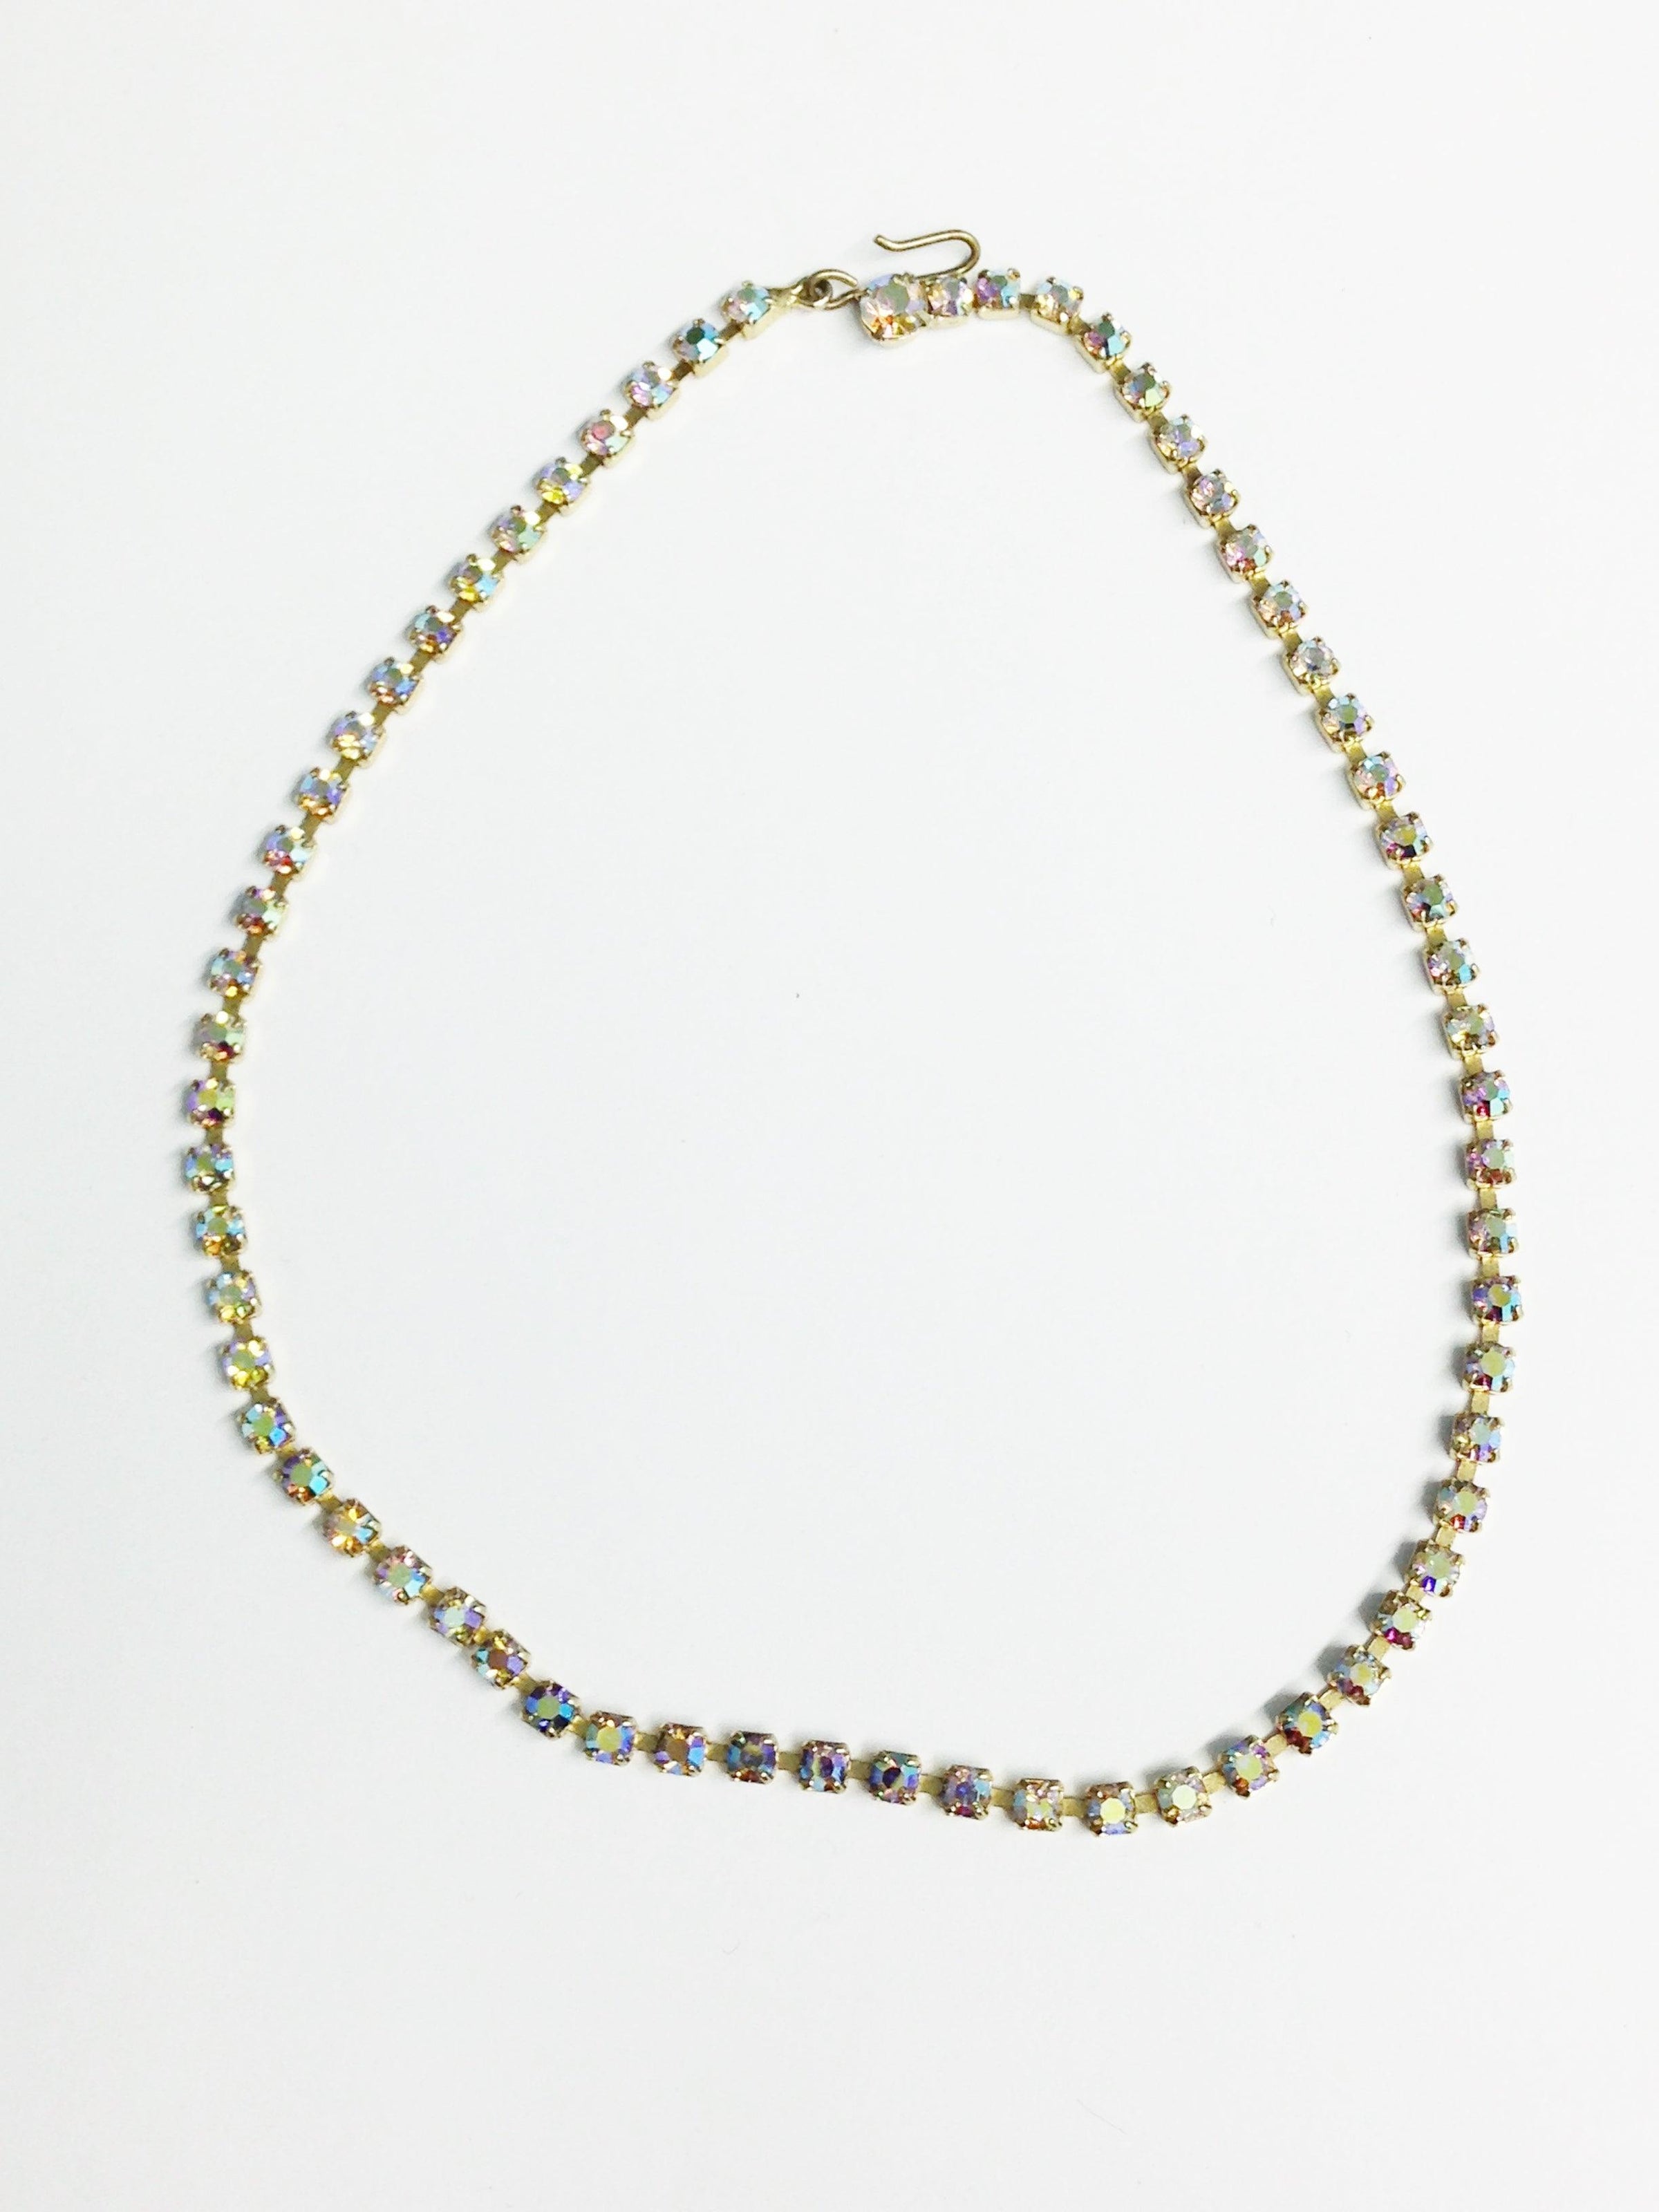 Vintage Gold Tone Aurora Borealis AB Rhinestone Necklace - Hers and His Treasures